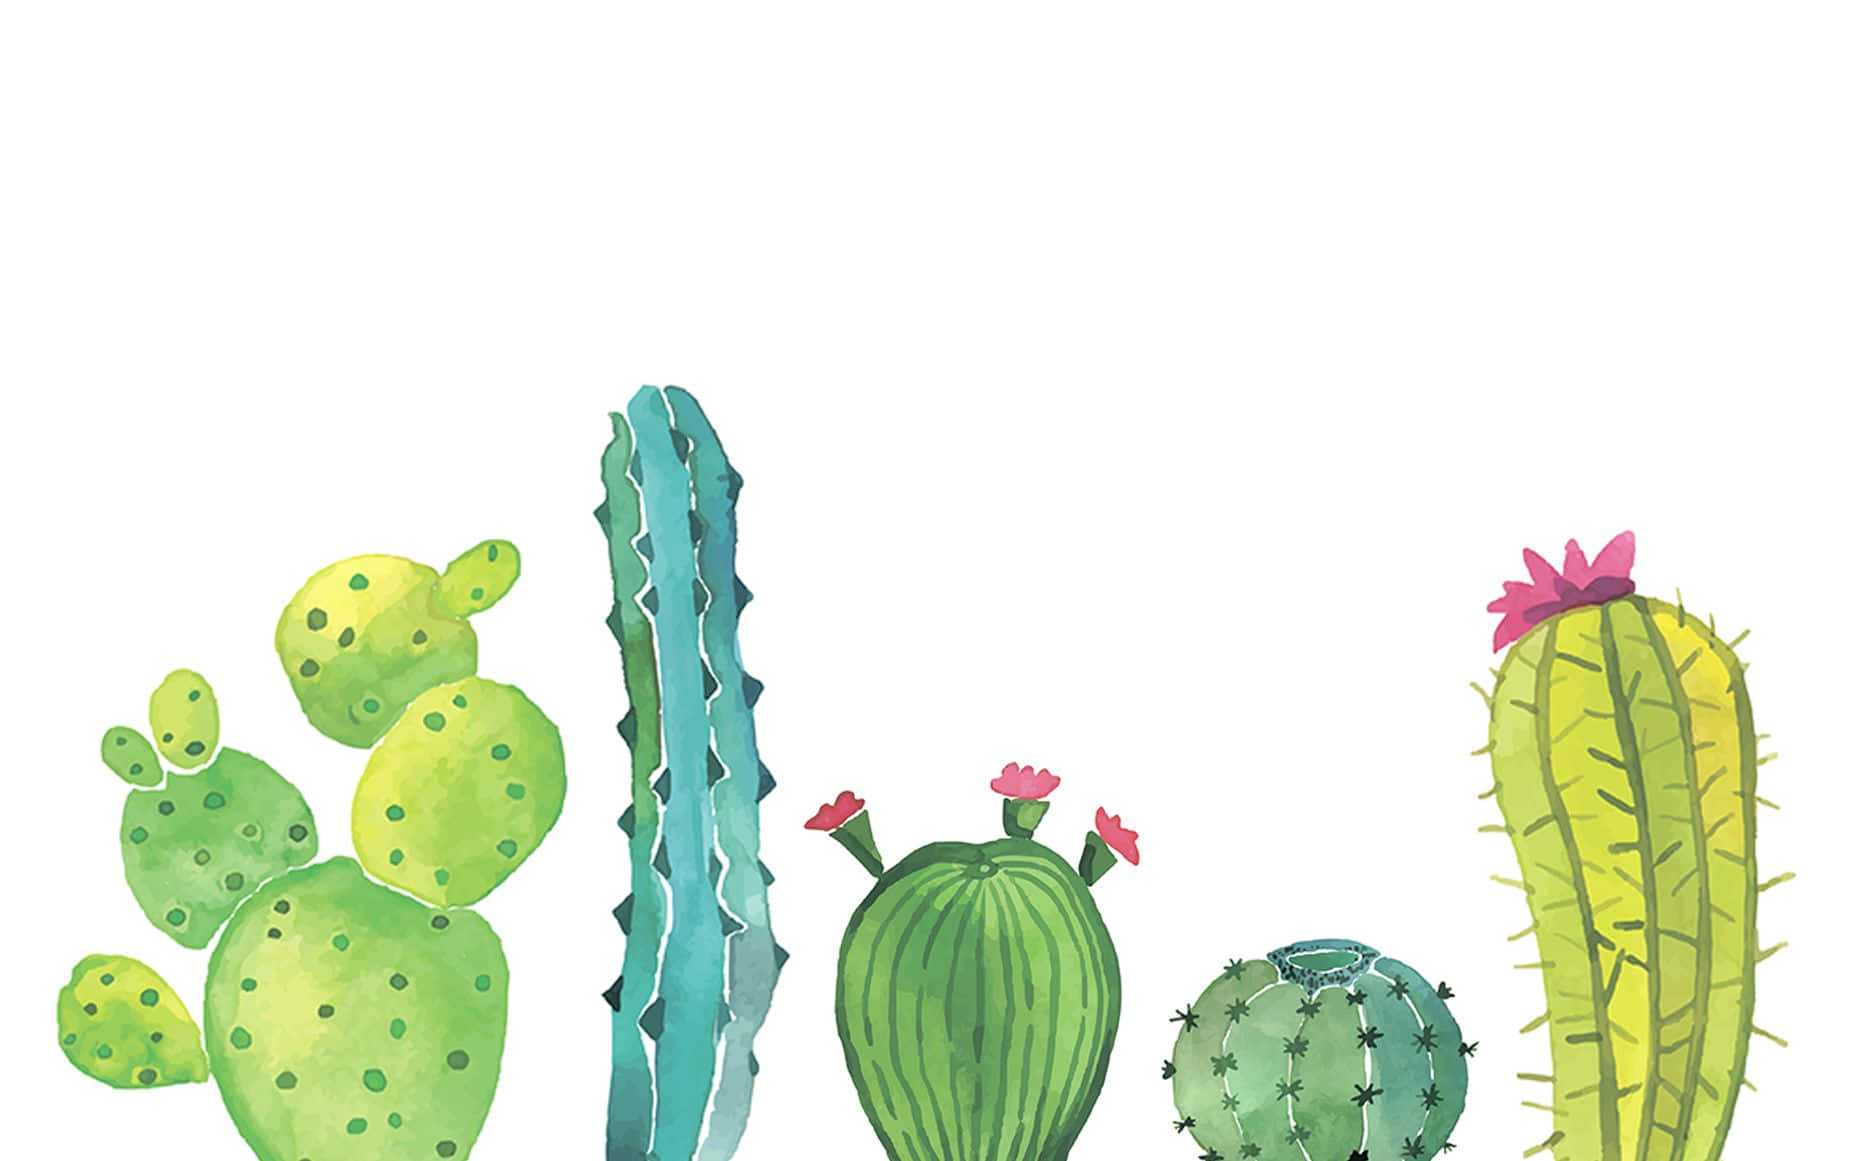 Pinturade Arte De Cactus En Acuarela